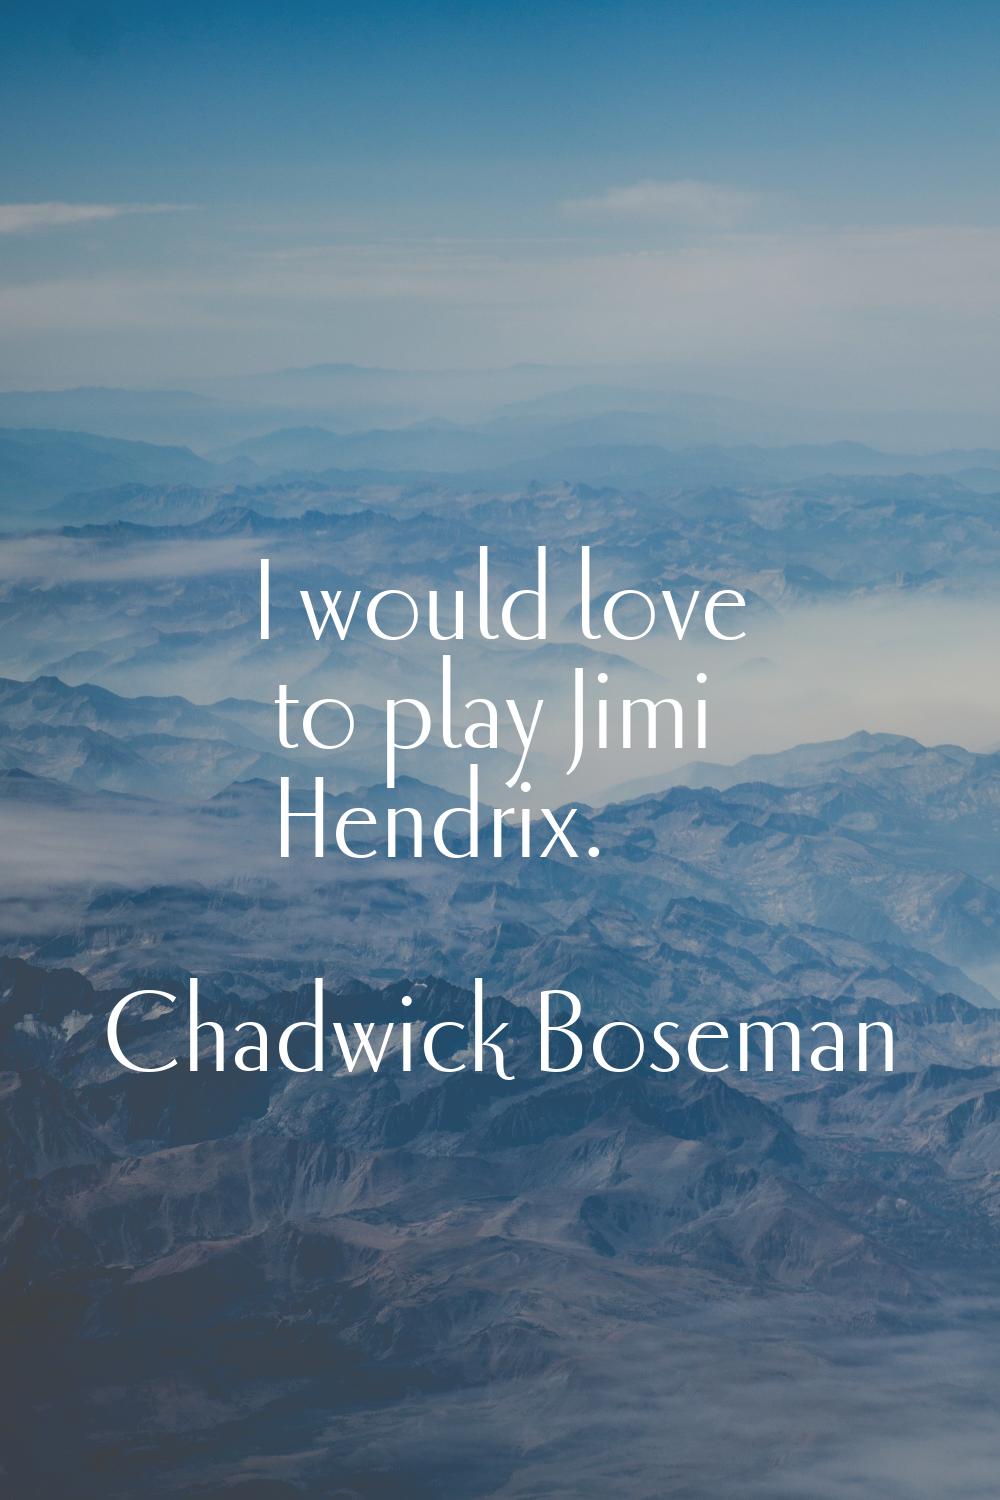 I would love to play Jimi Hendrix.